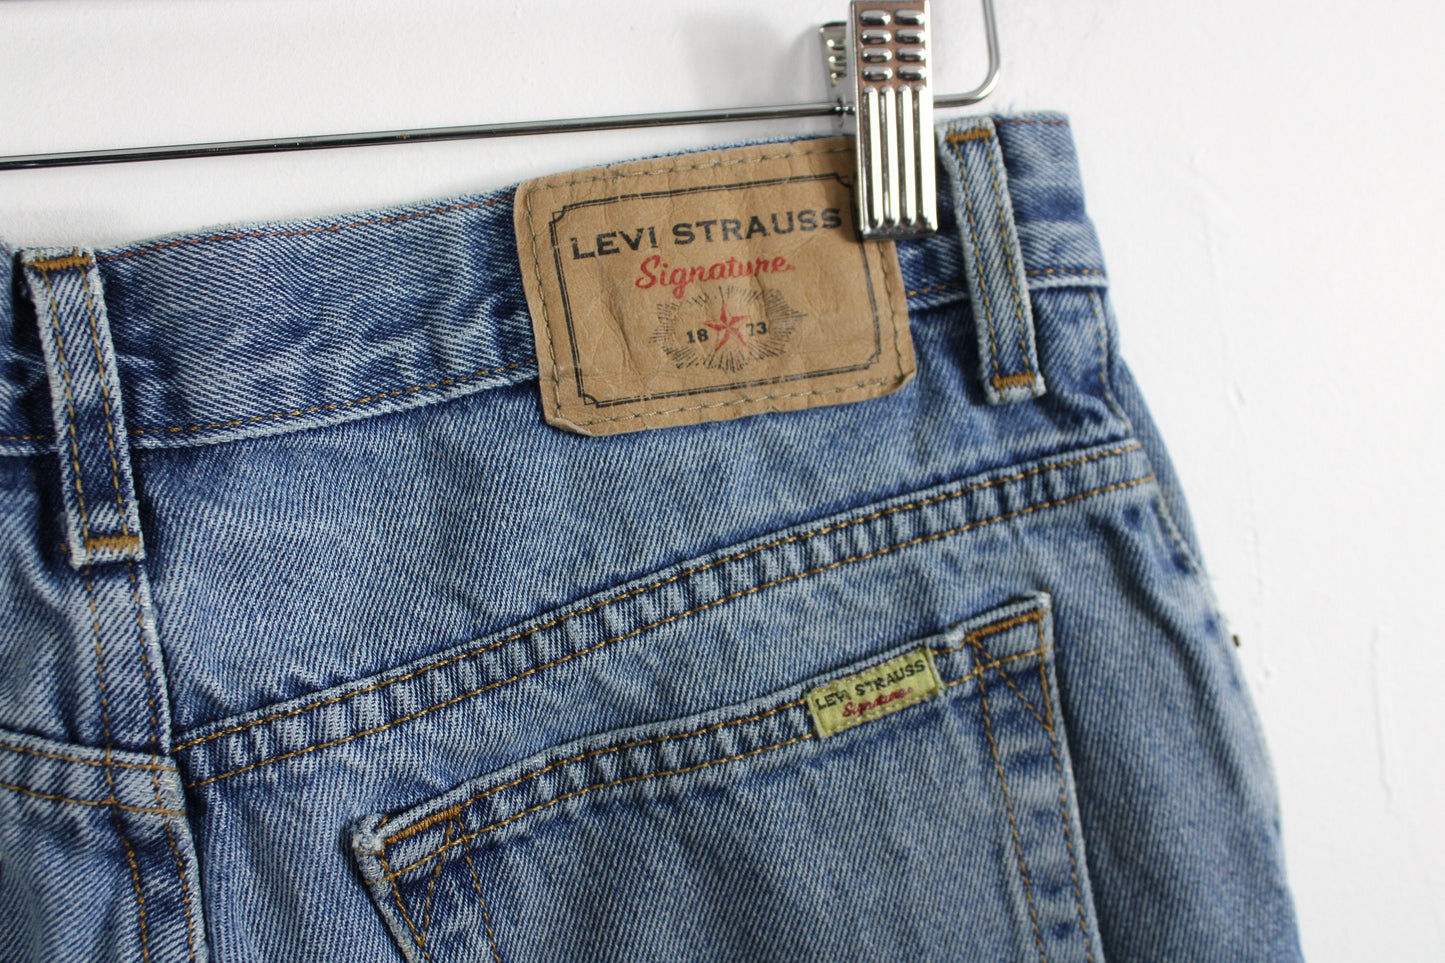 Levis Jean Shorts / 90s Vintage Blue Levi's Strauss Denim Jorts Streetwear / Hip Hop Clothing / Size 31x32